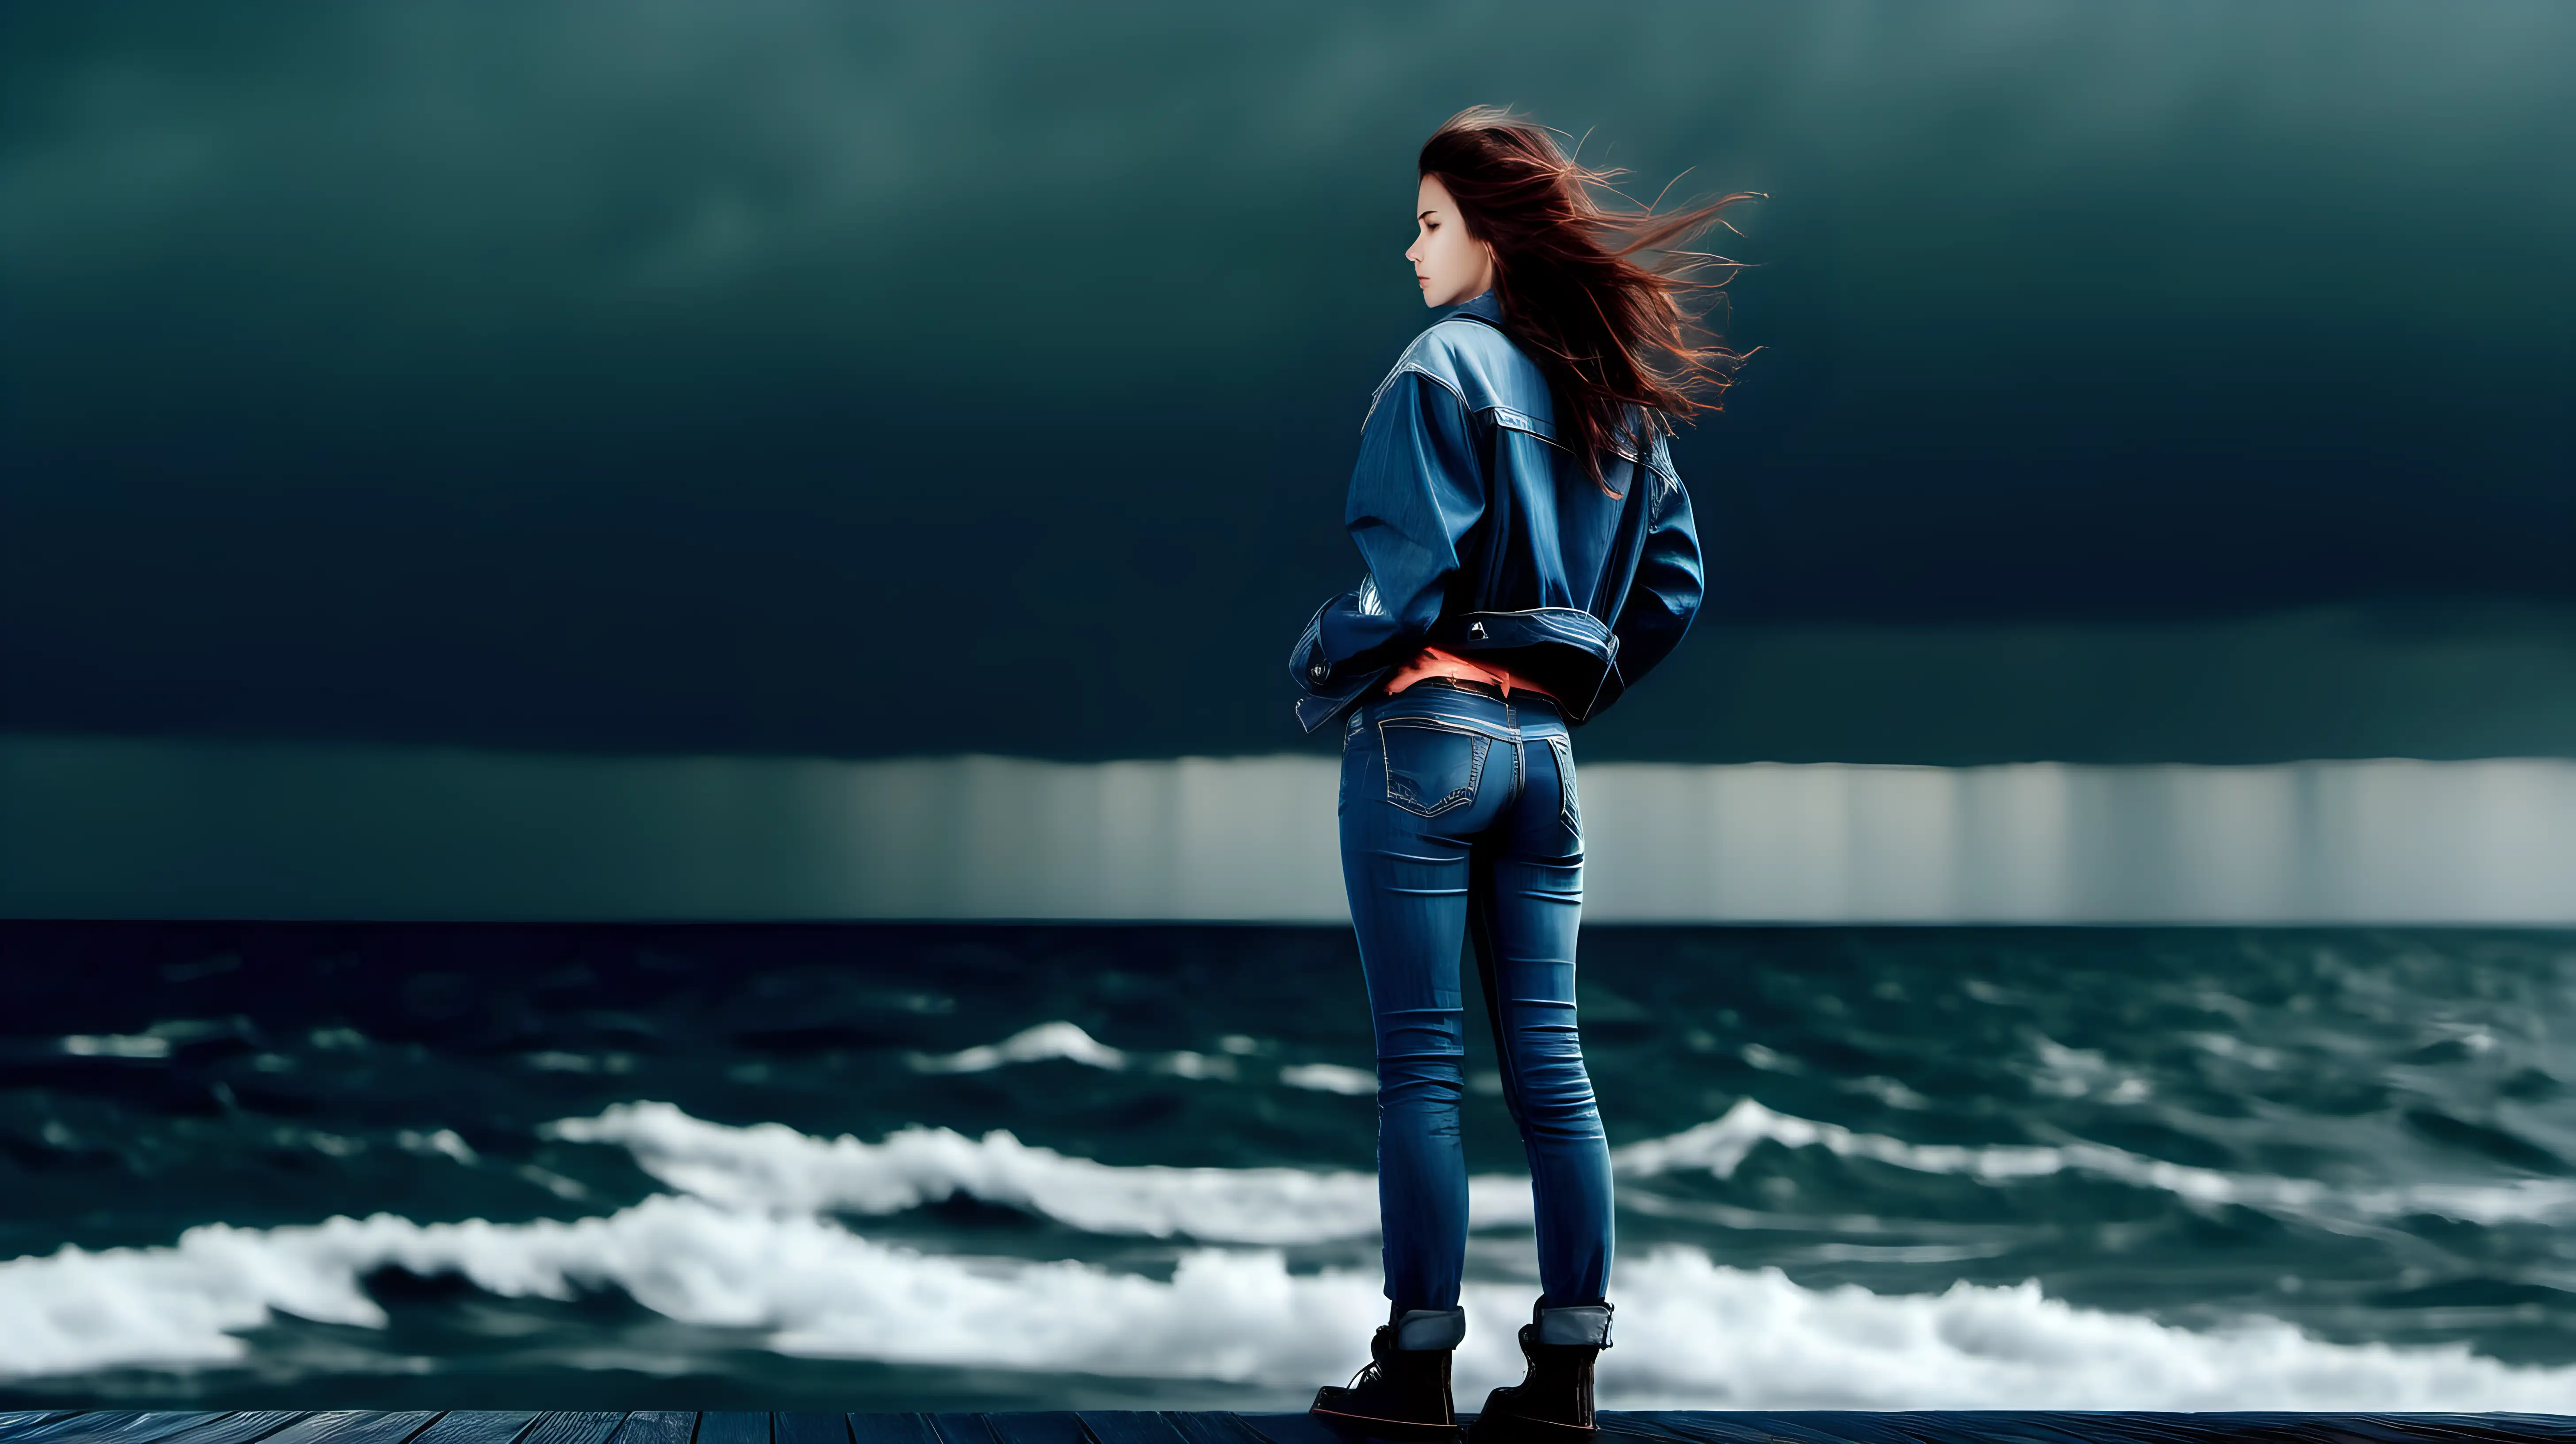 beauty girl jacket jeans pants alone watching side sea in storm horizon ship rain wind waves
